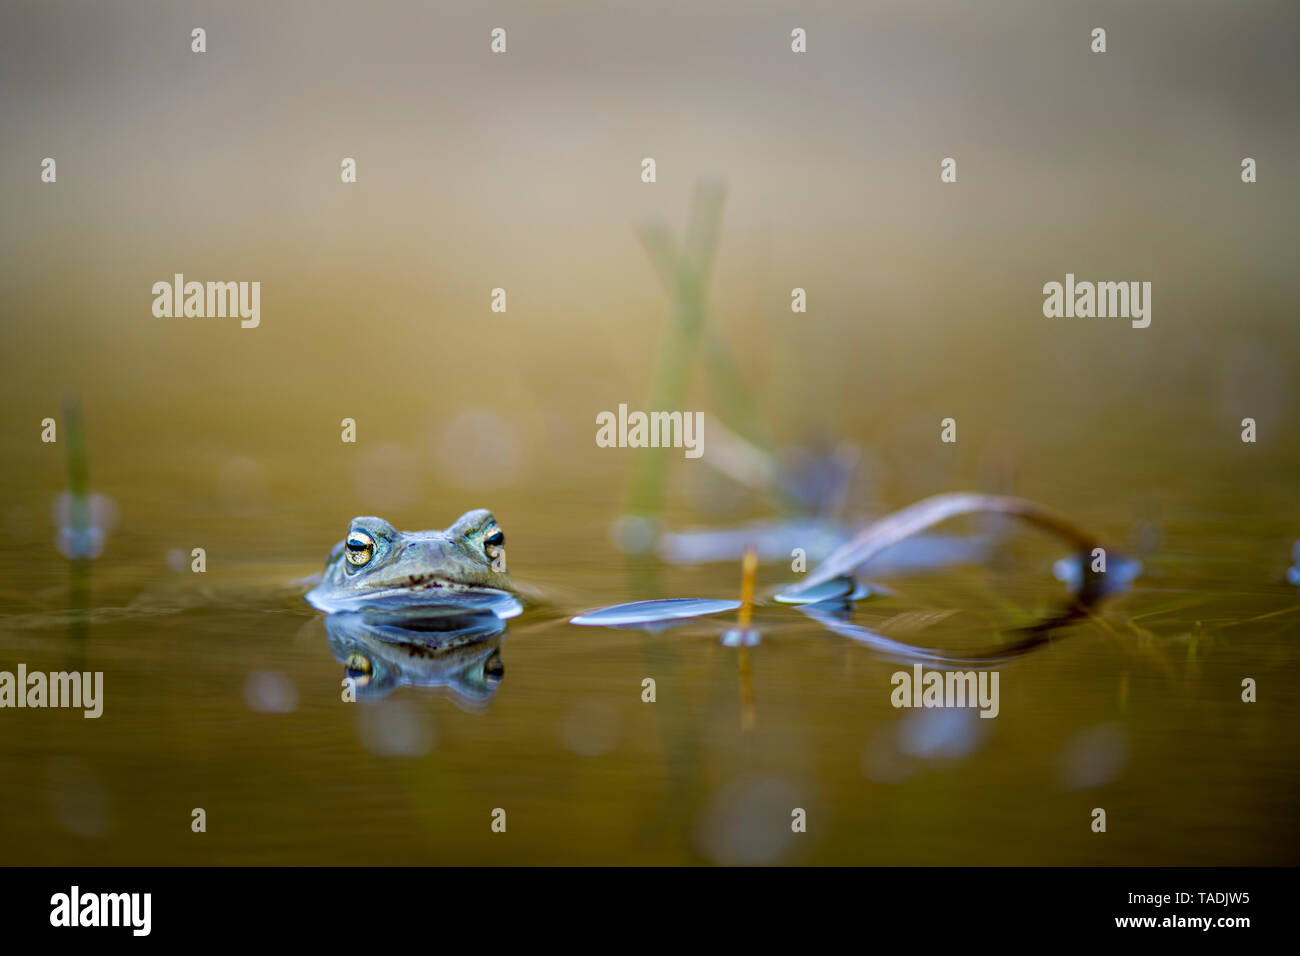 Peeking Common Toad in water Stock Photo